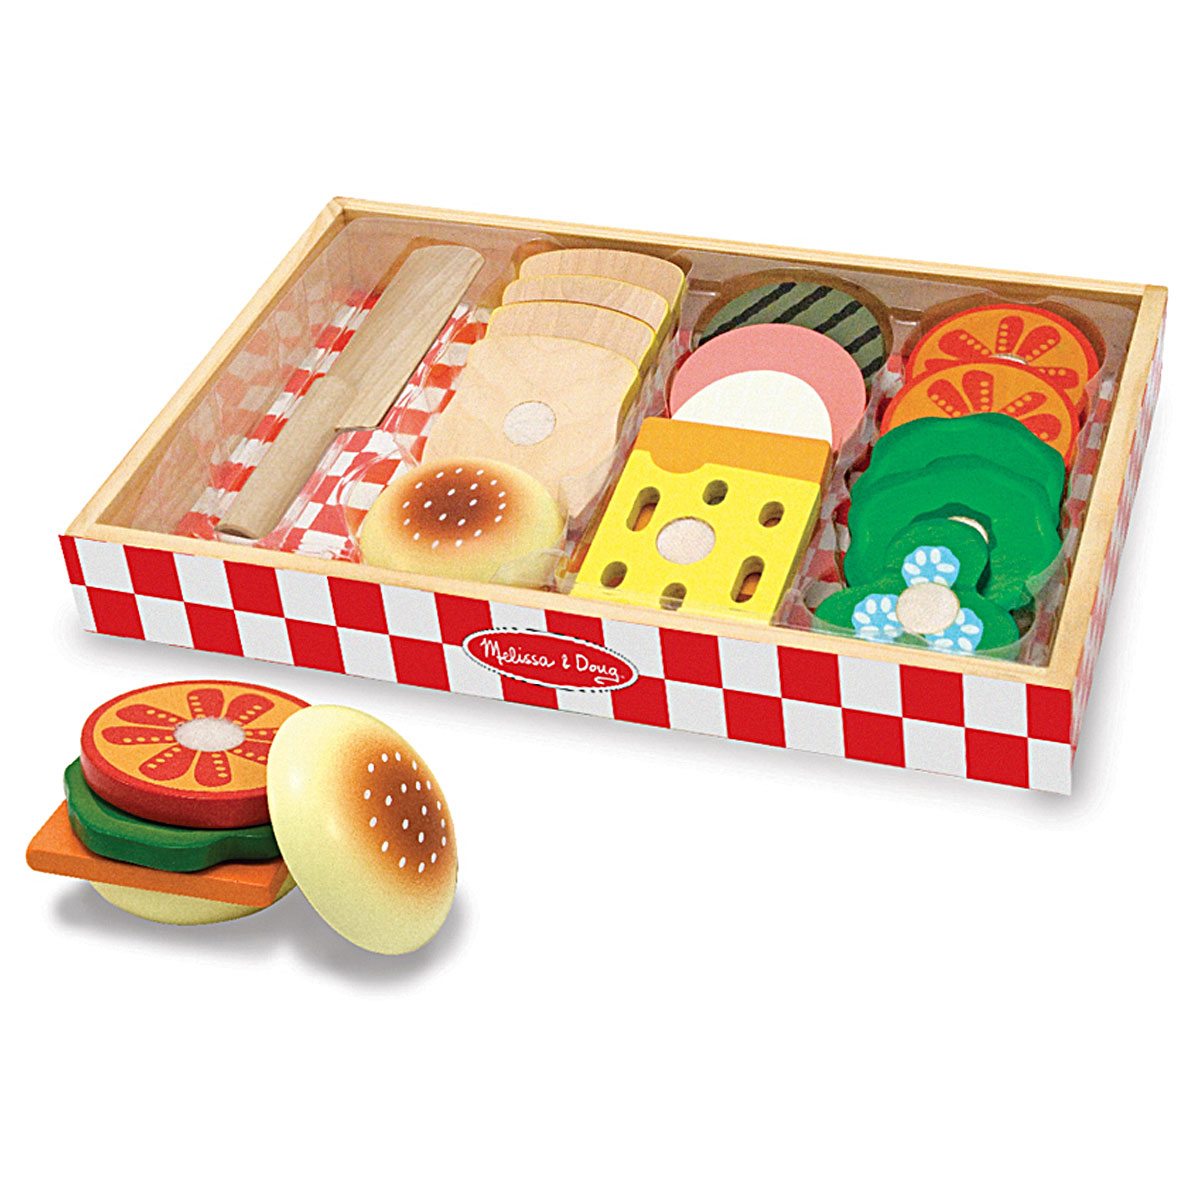 Lebensmittelset aus Holz Spiellebensmittel Sandwich Brot